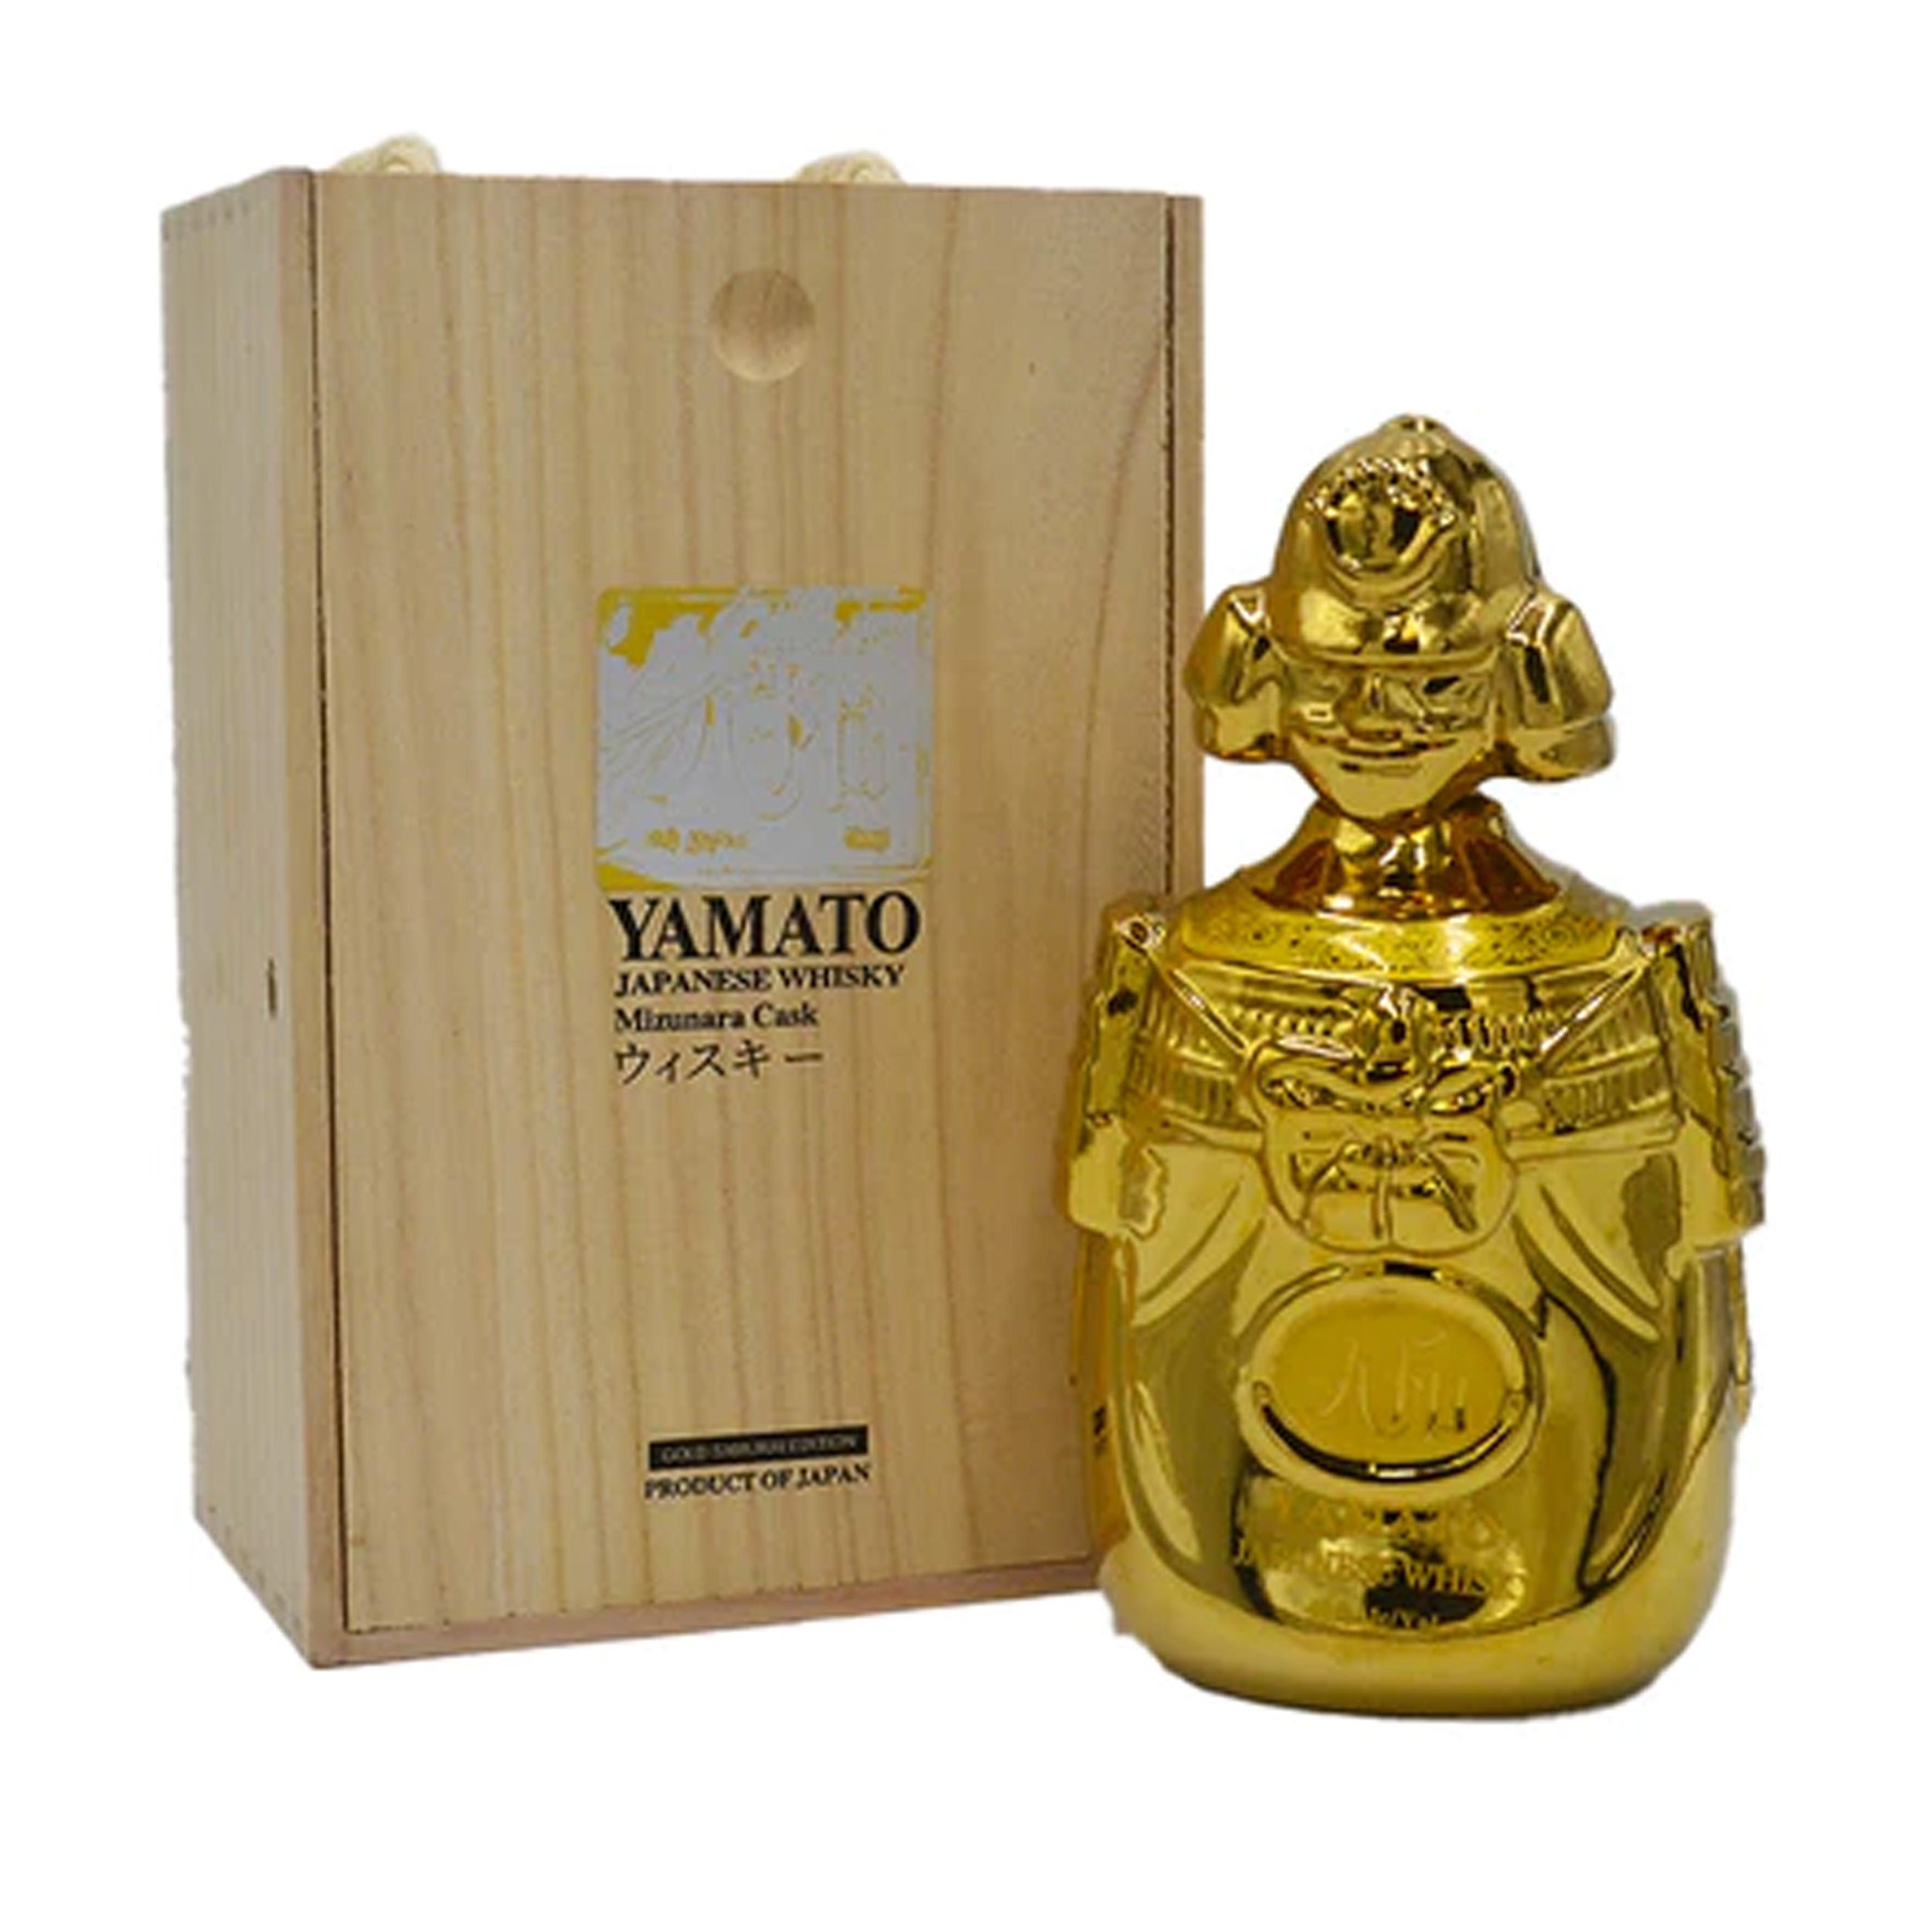 Yamato Gold Samurai Japanese Whisky